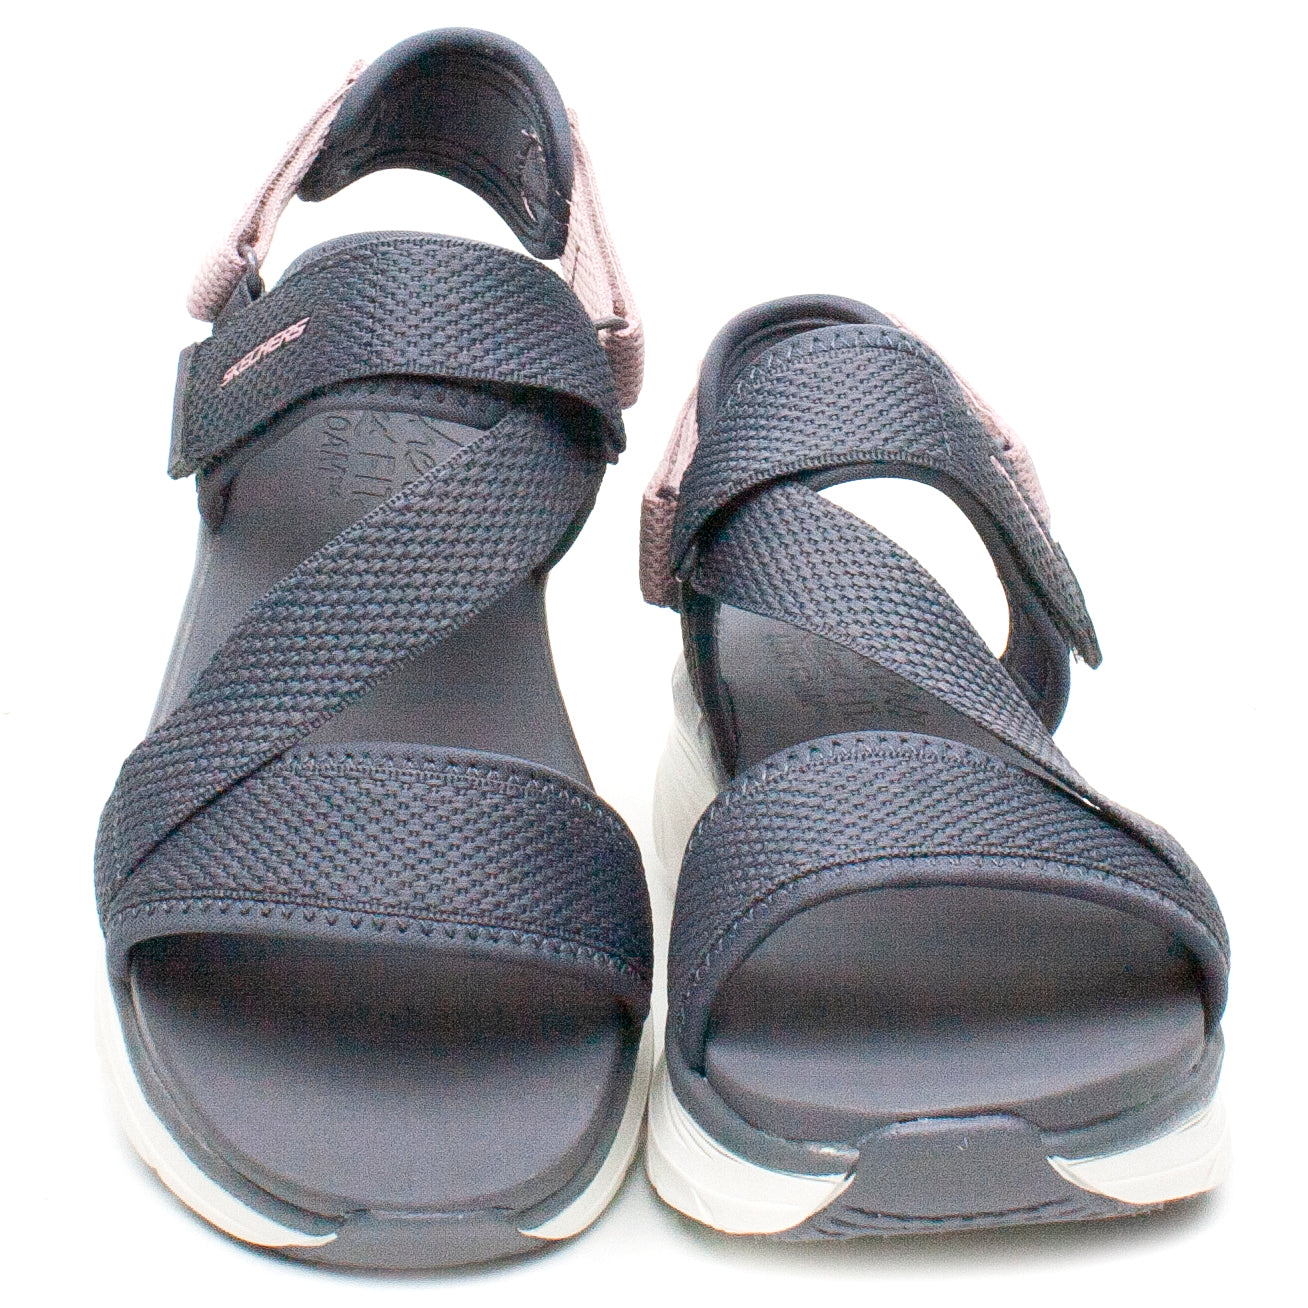 Skechers sandale dama 119302 gri ID3001-GRI